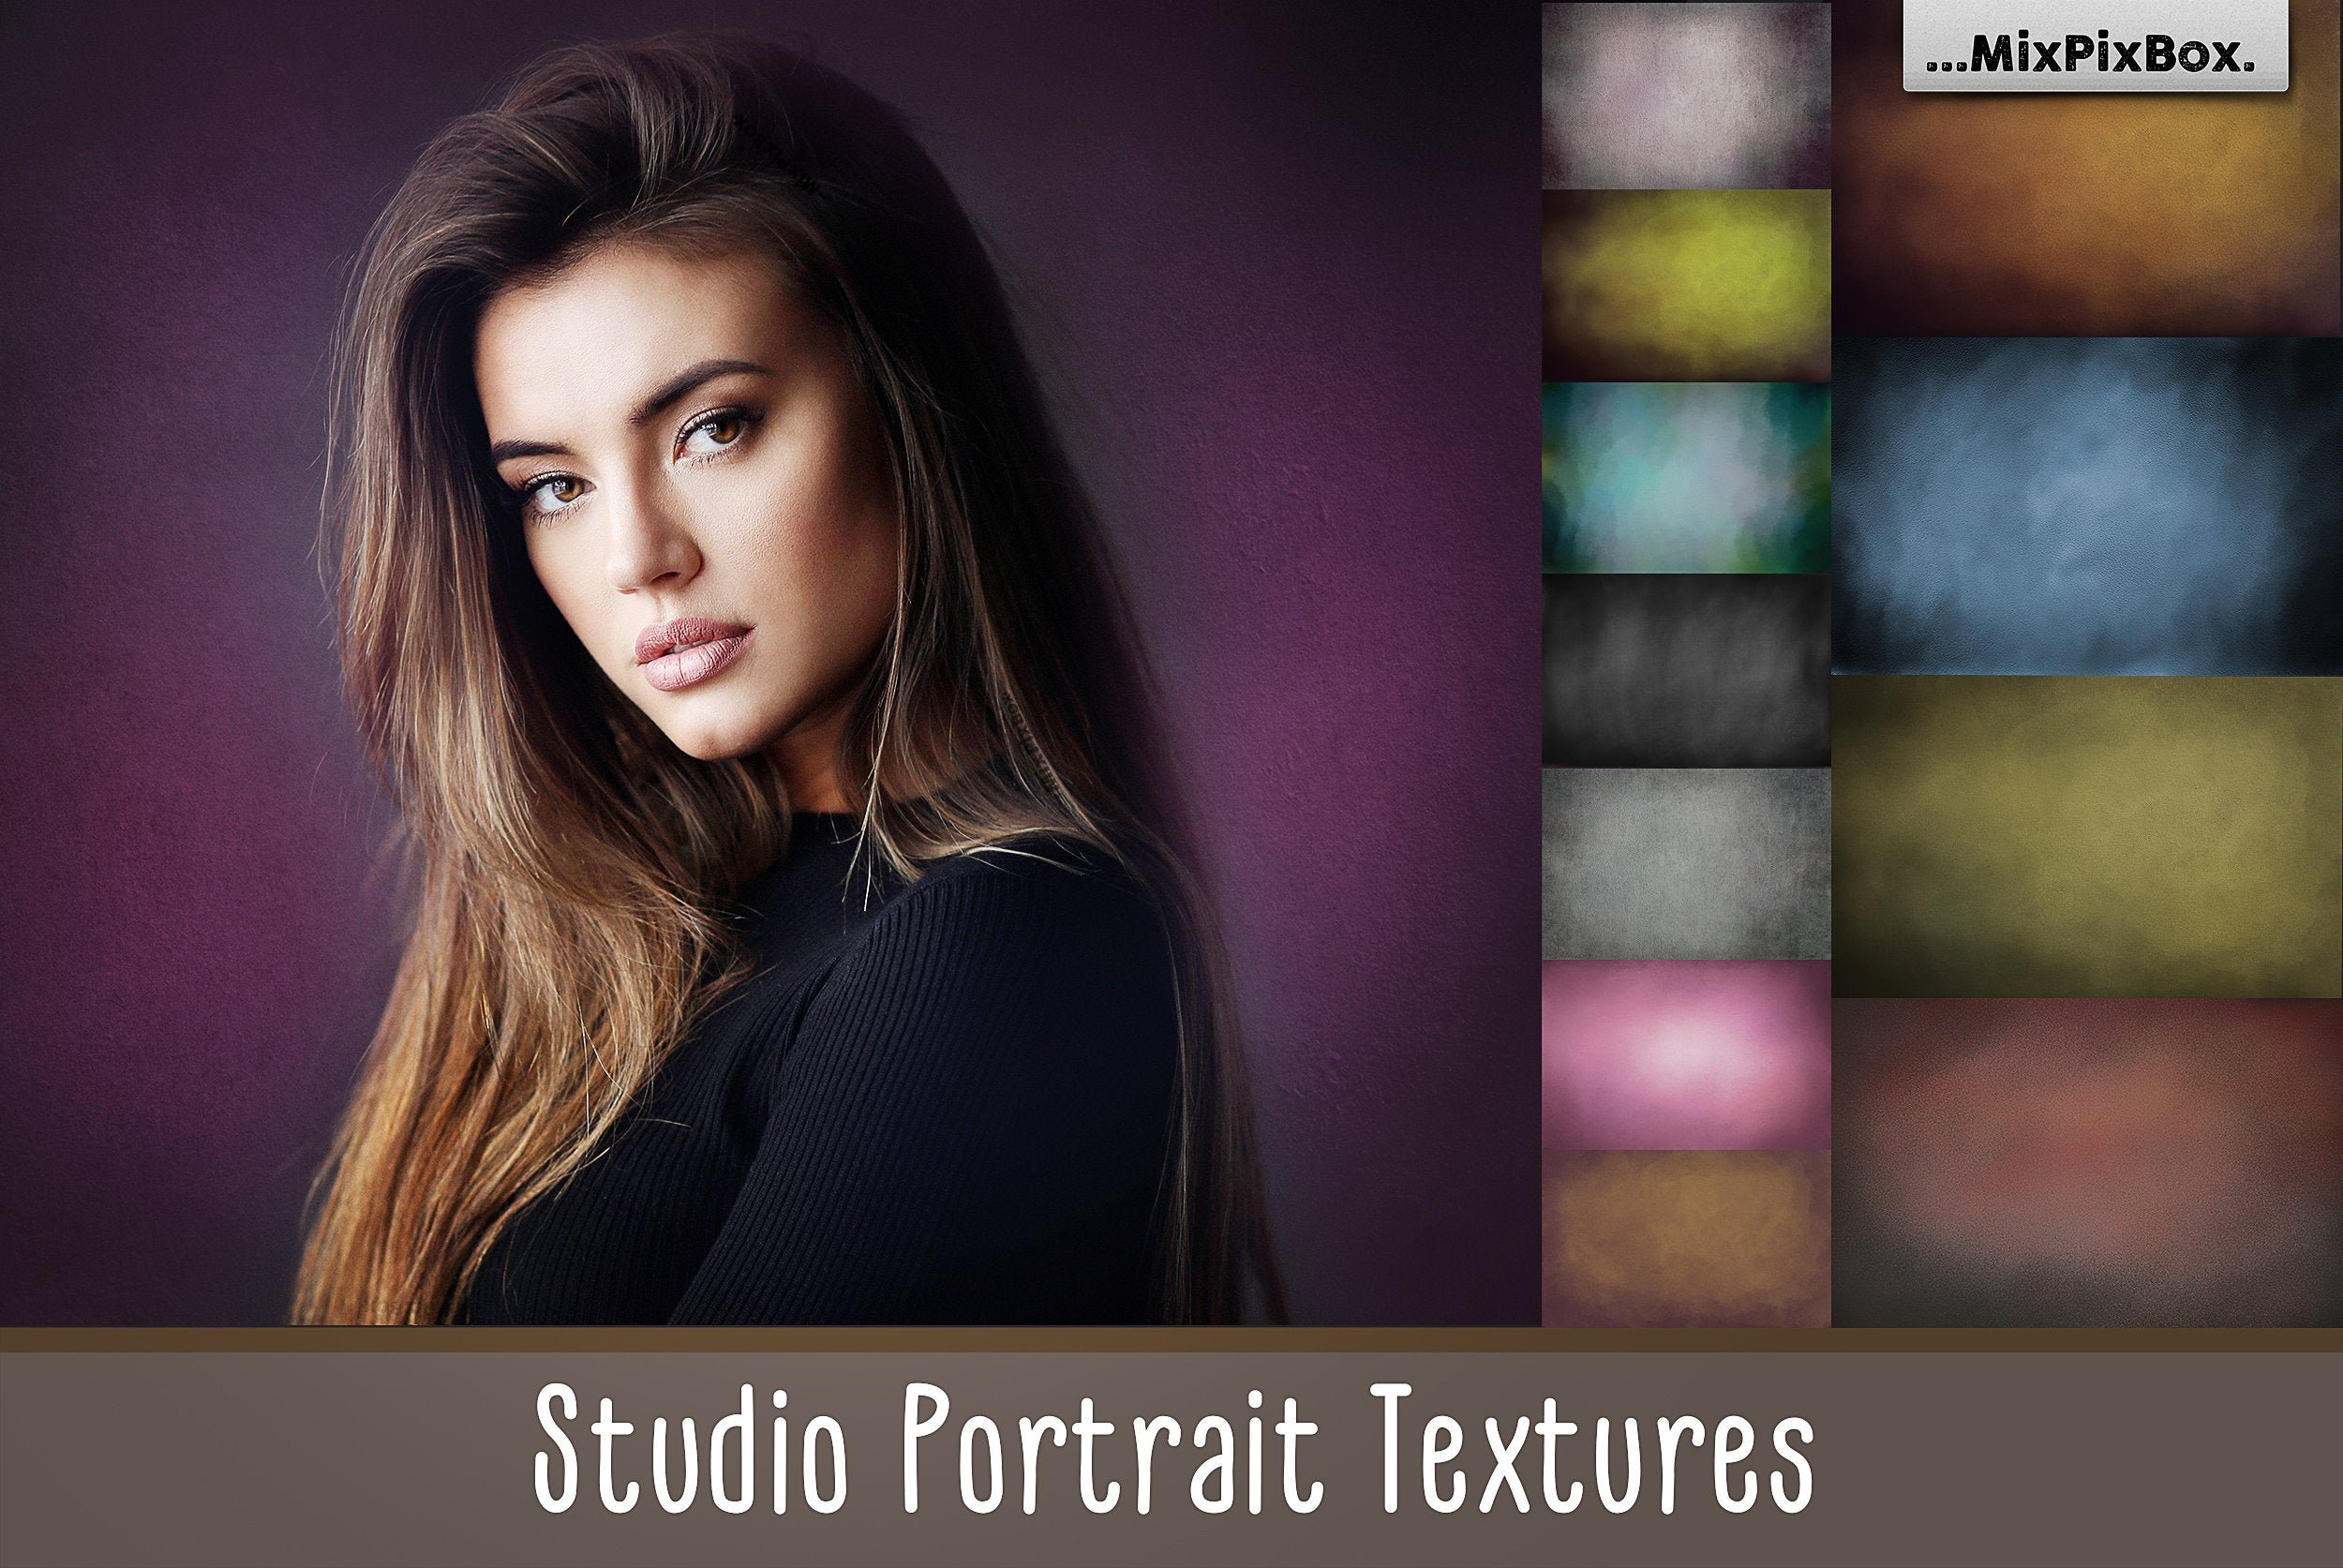 Studio Portrait Photo Texturescover image.